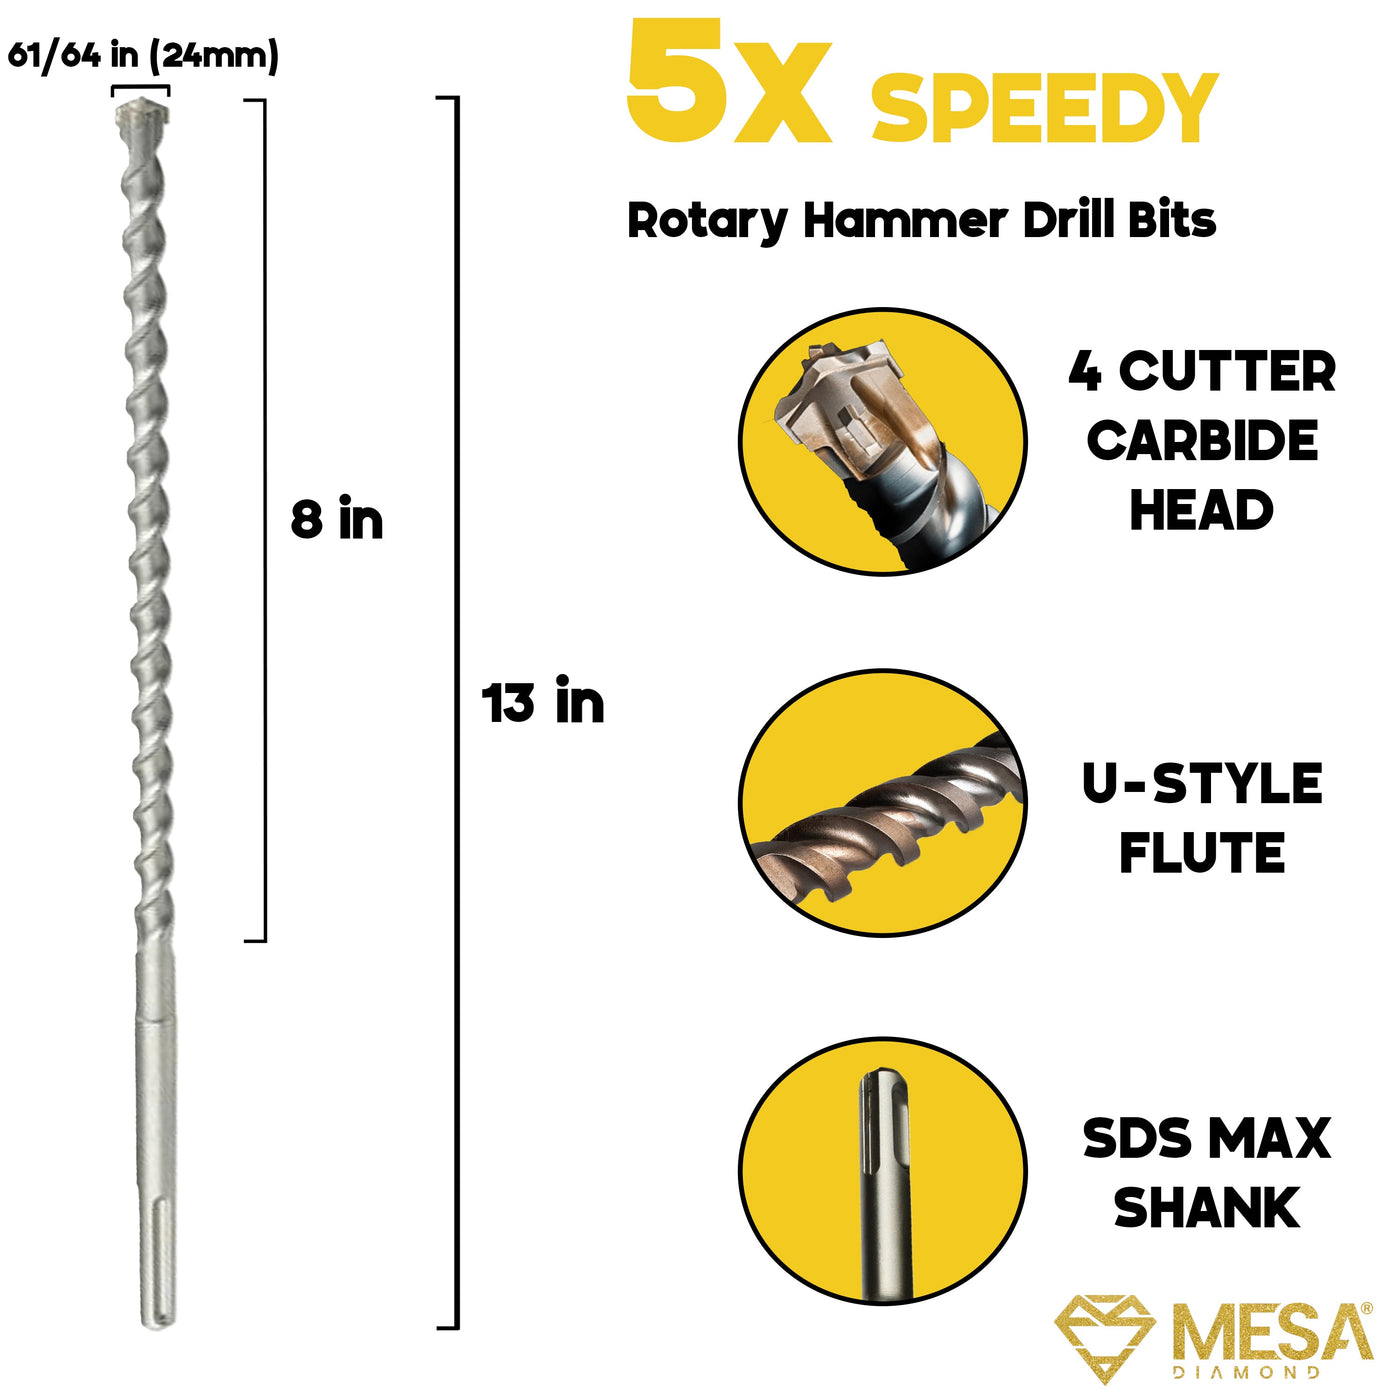 4 CUTTER SDS MAX Masonry Drill BitMESA DIAMOND®4SDSMAX241361/64 in (24mm)61/64 in (24mm)13 in